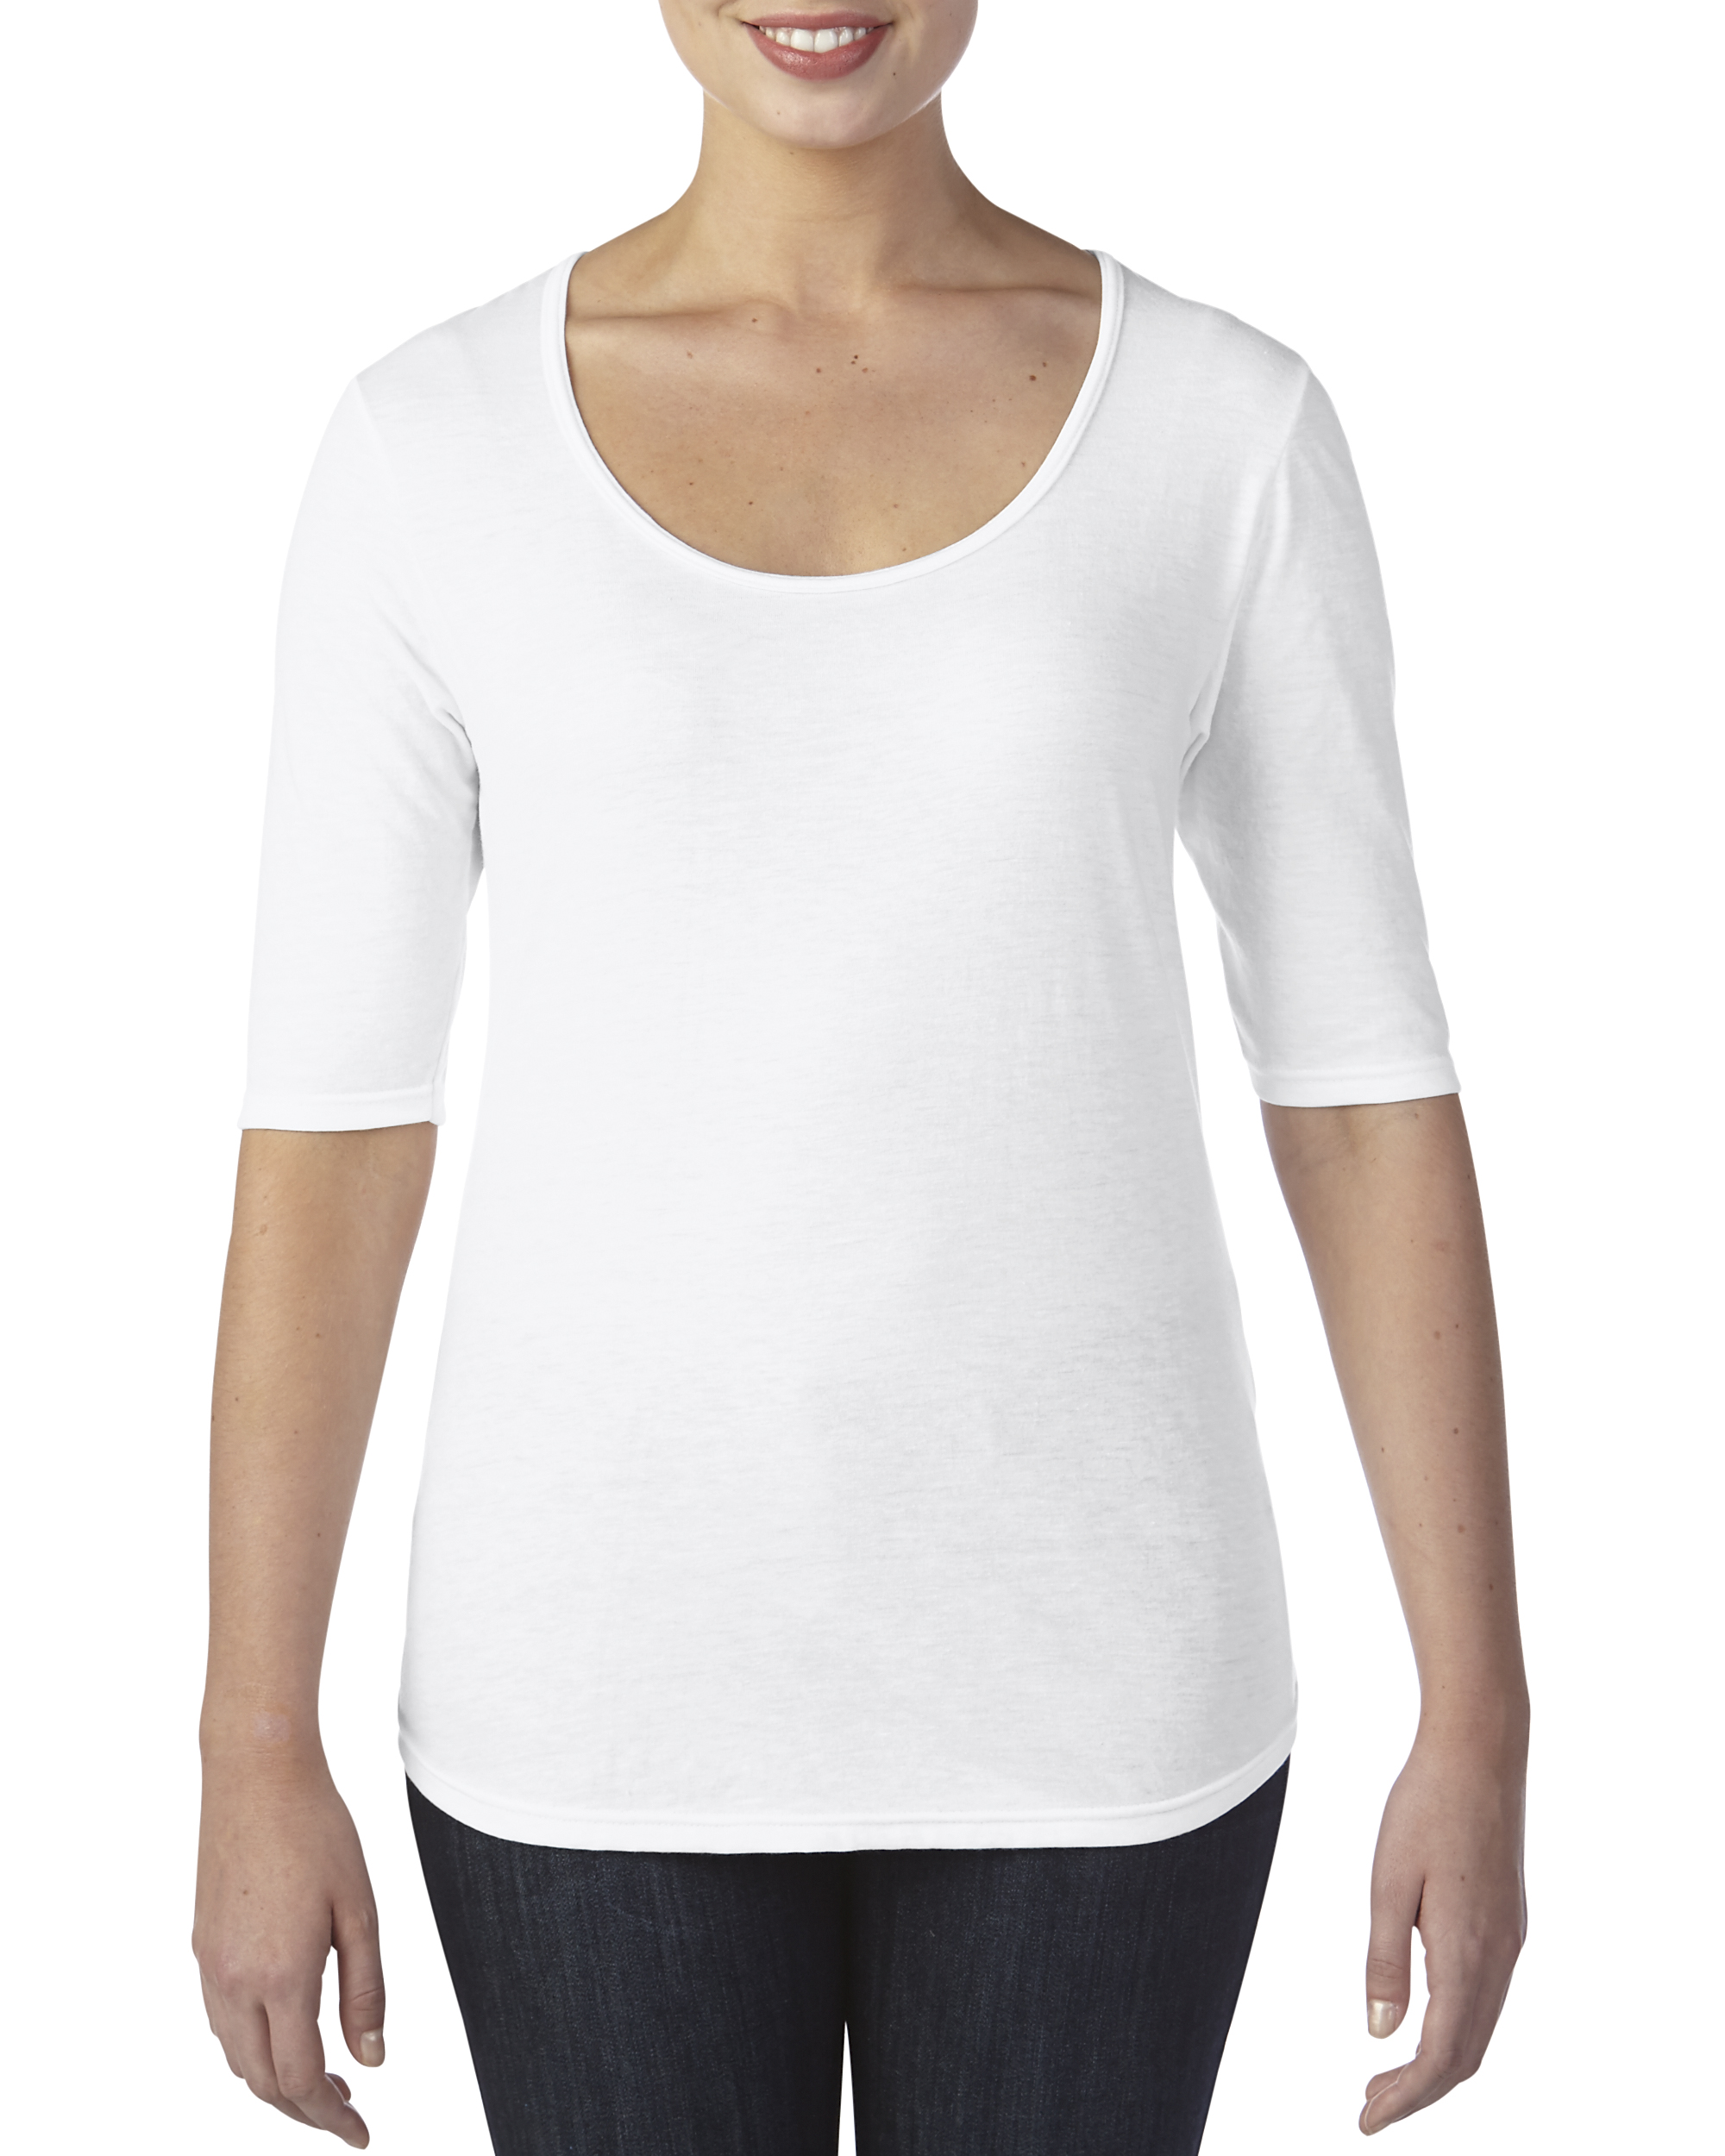 T-shirt Women’s Tri-Blend Deep Scoop 1/2 Sleeve Tee ANVIL